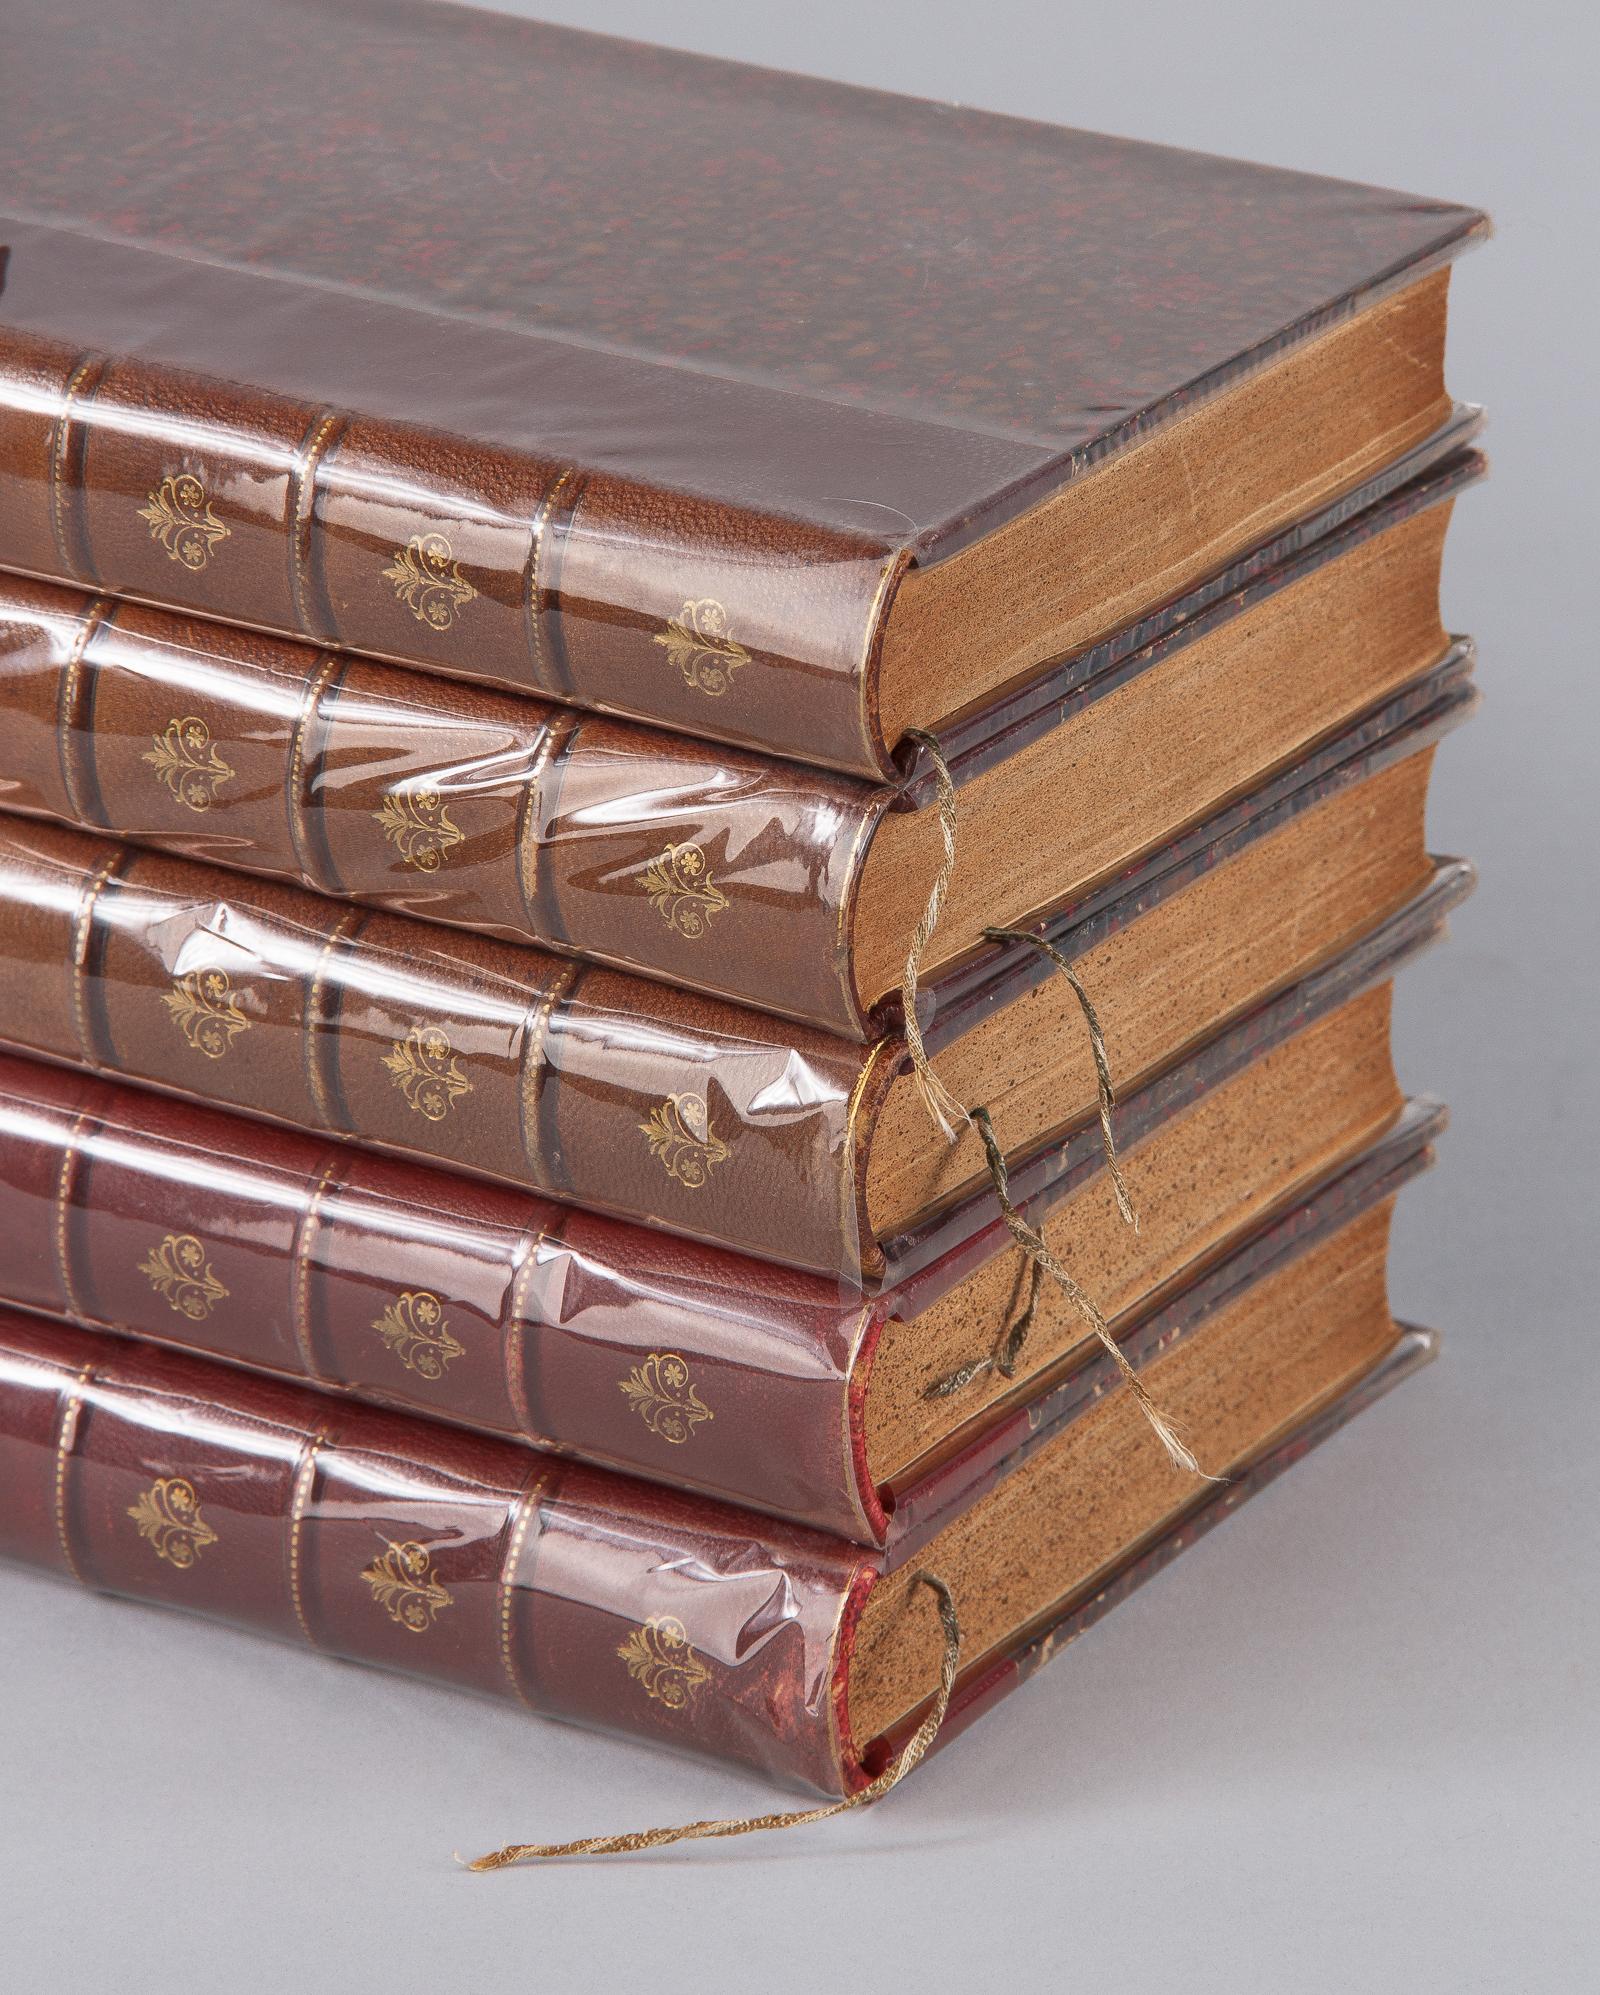 Leather Bound French Books-La Lecture Illustree, Late 1800s 2